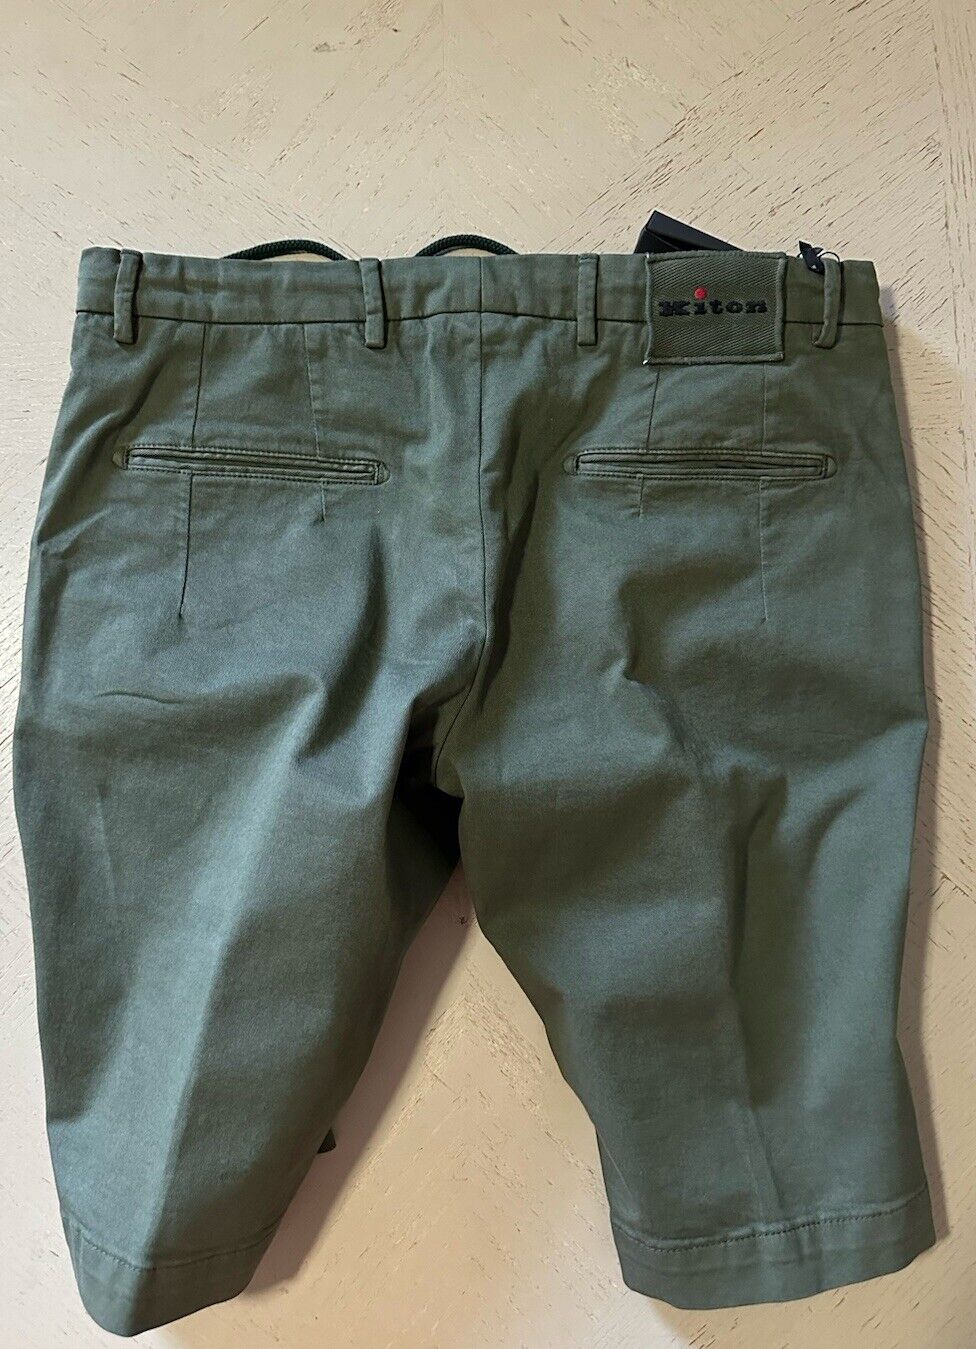 Kiton Men Cotton Woven Short Pants Color Green Size 32 US/48 Eu Italy New $1095